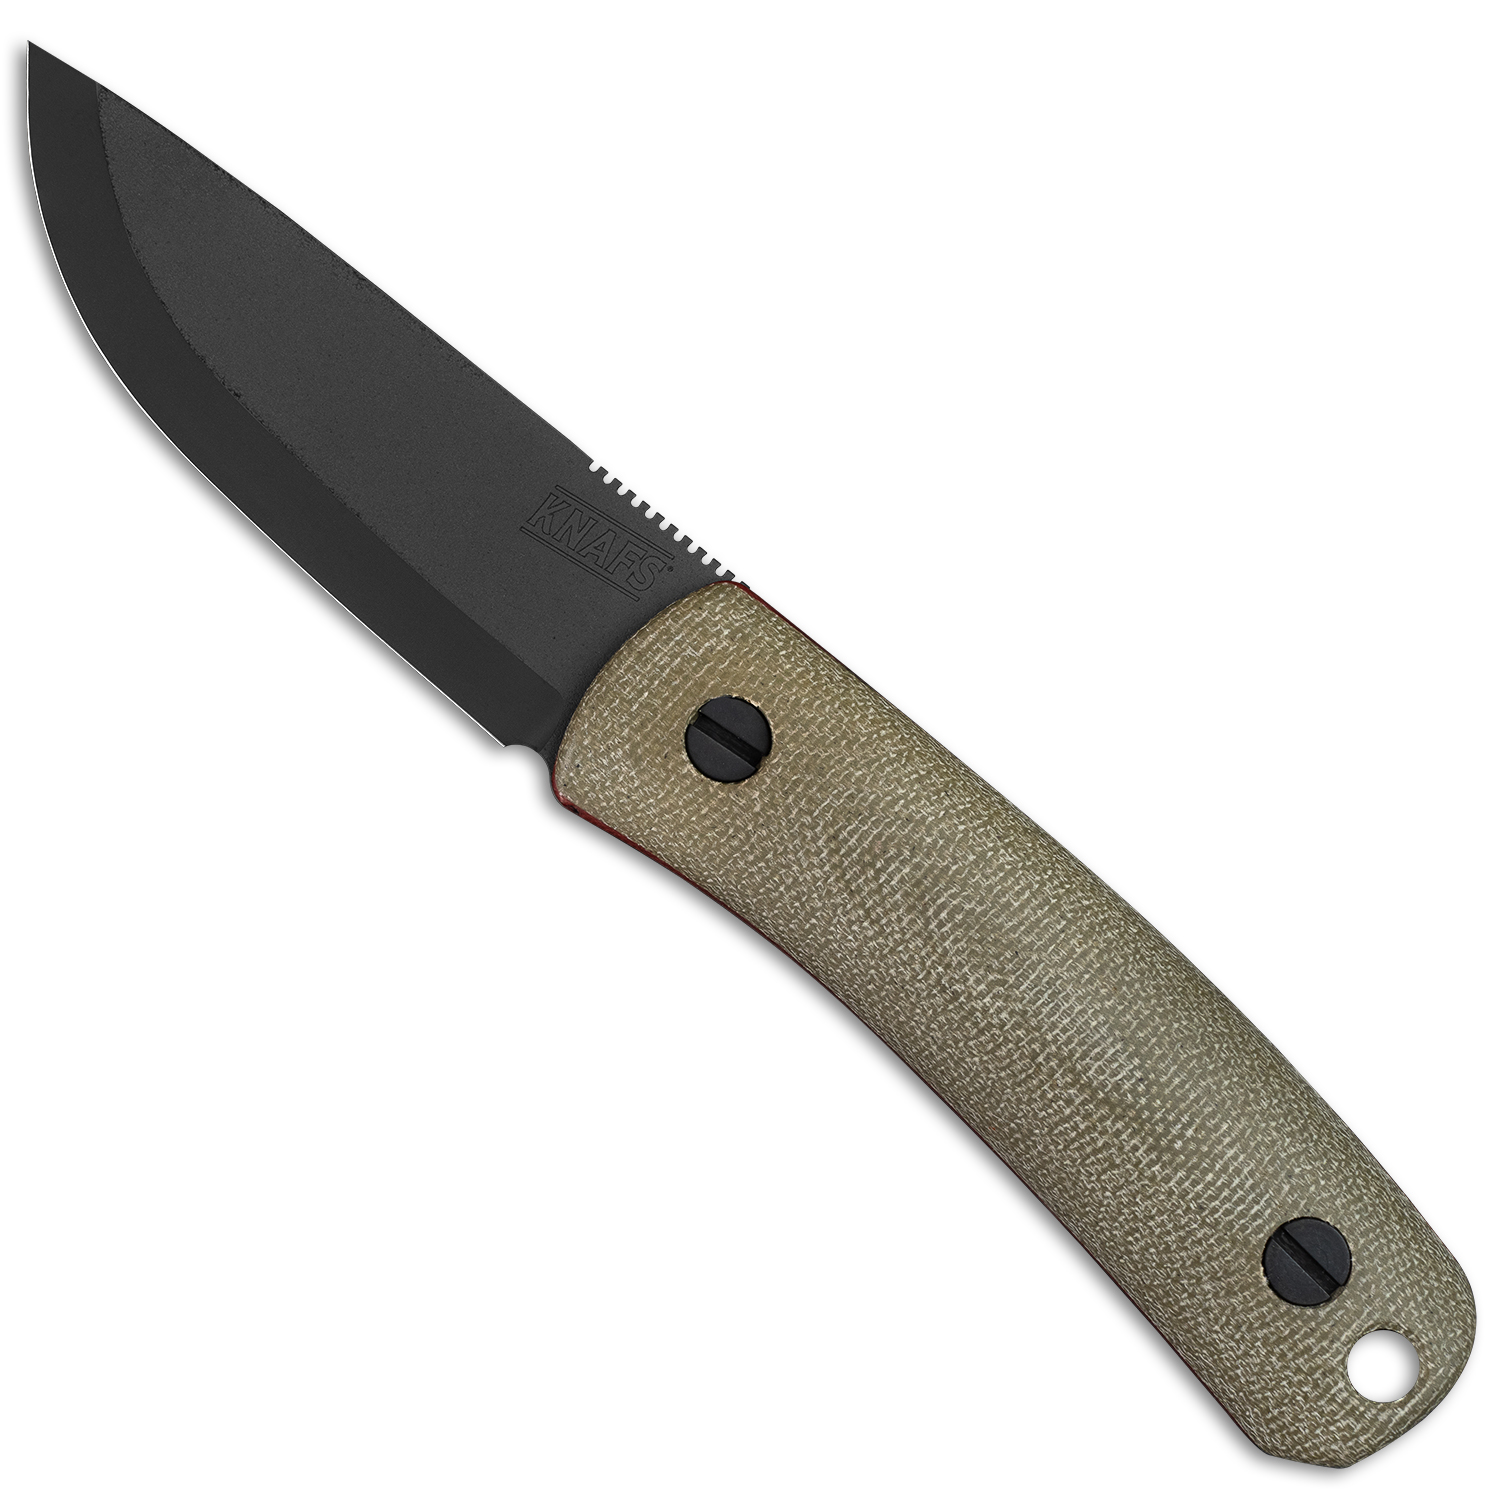 Knafs Lulu - Fixed Blade Knife